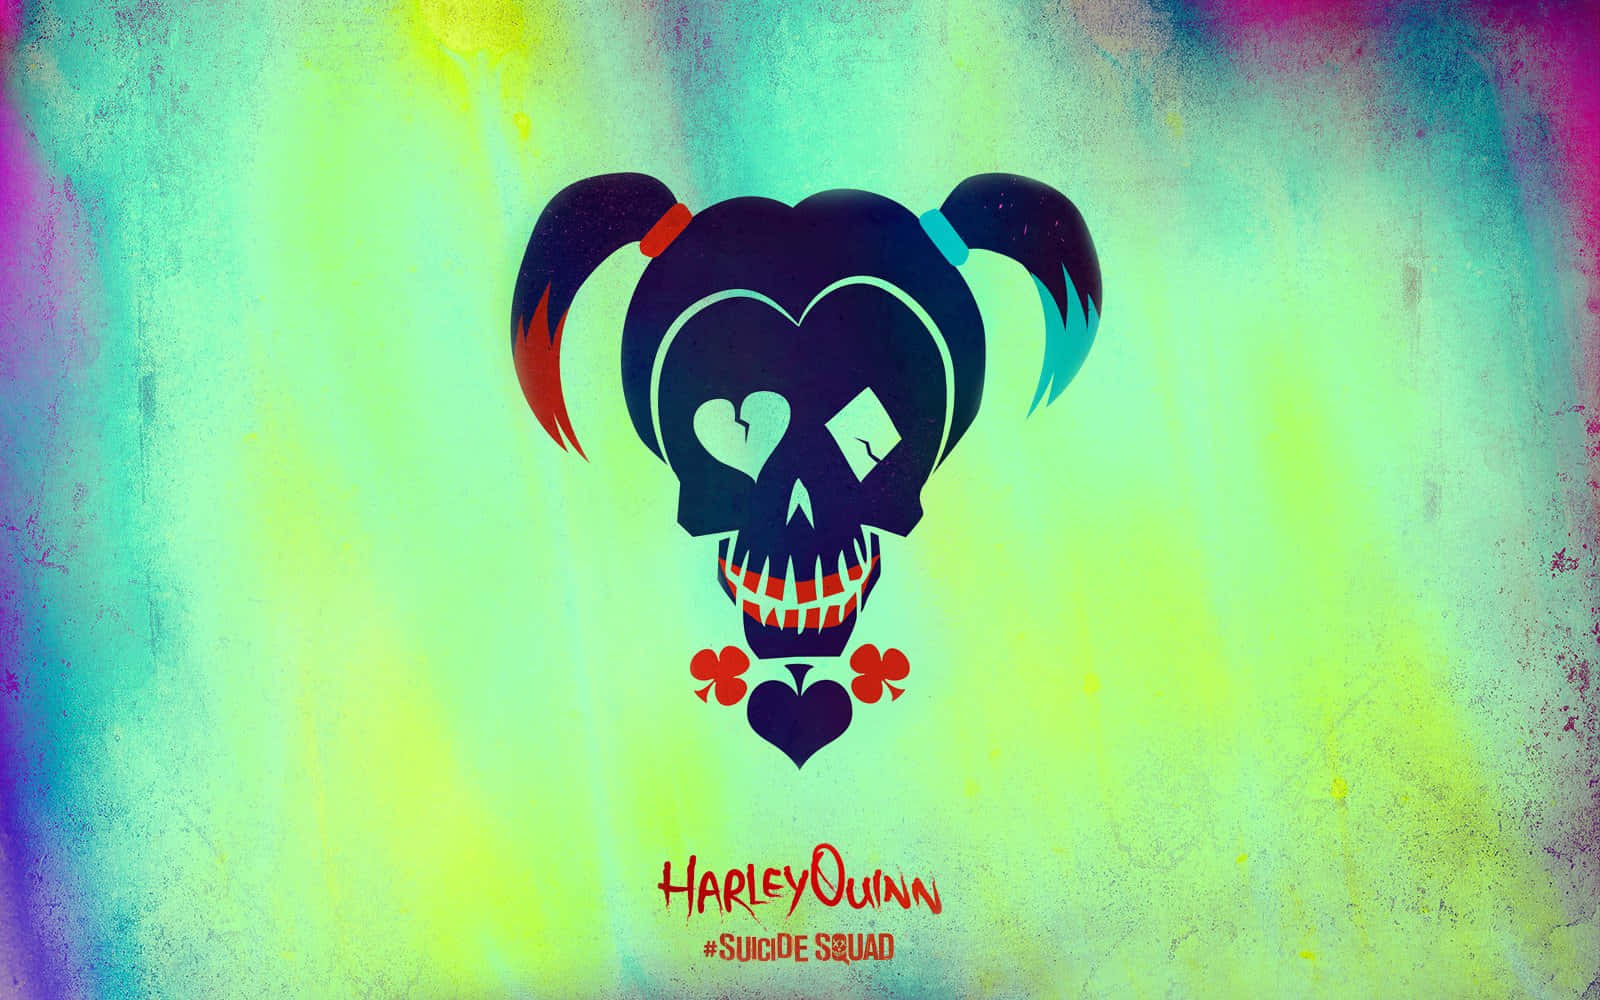 Hintergrundmit Harley Quinn Totenkopf-logo